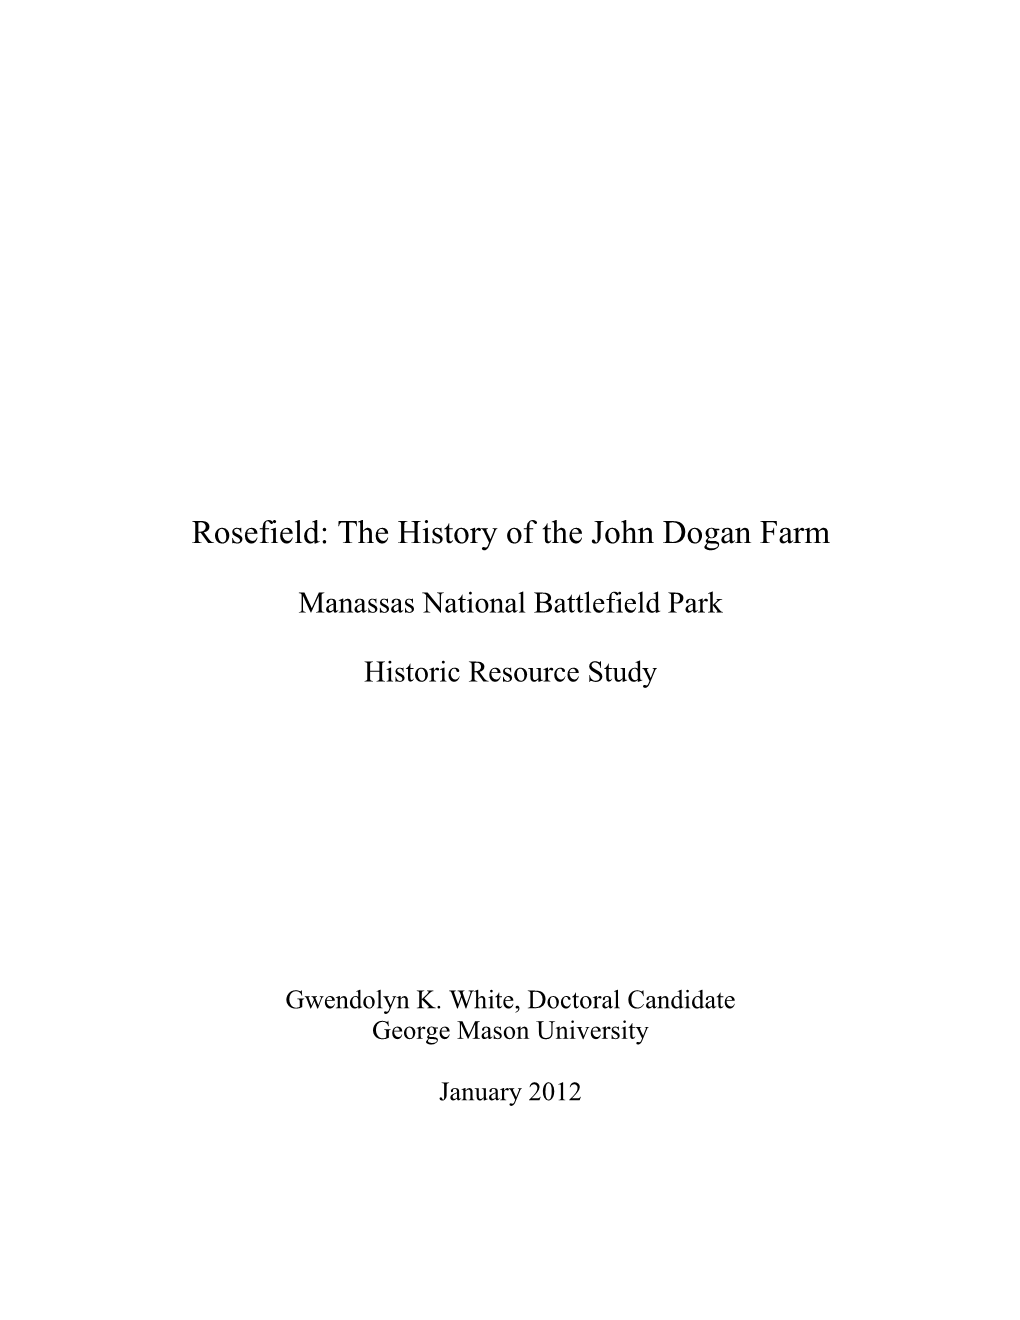 The History of the John Dogan Farm Manassas National Battlefield Park Historic Resource Study